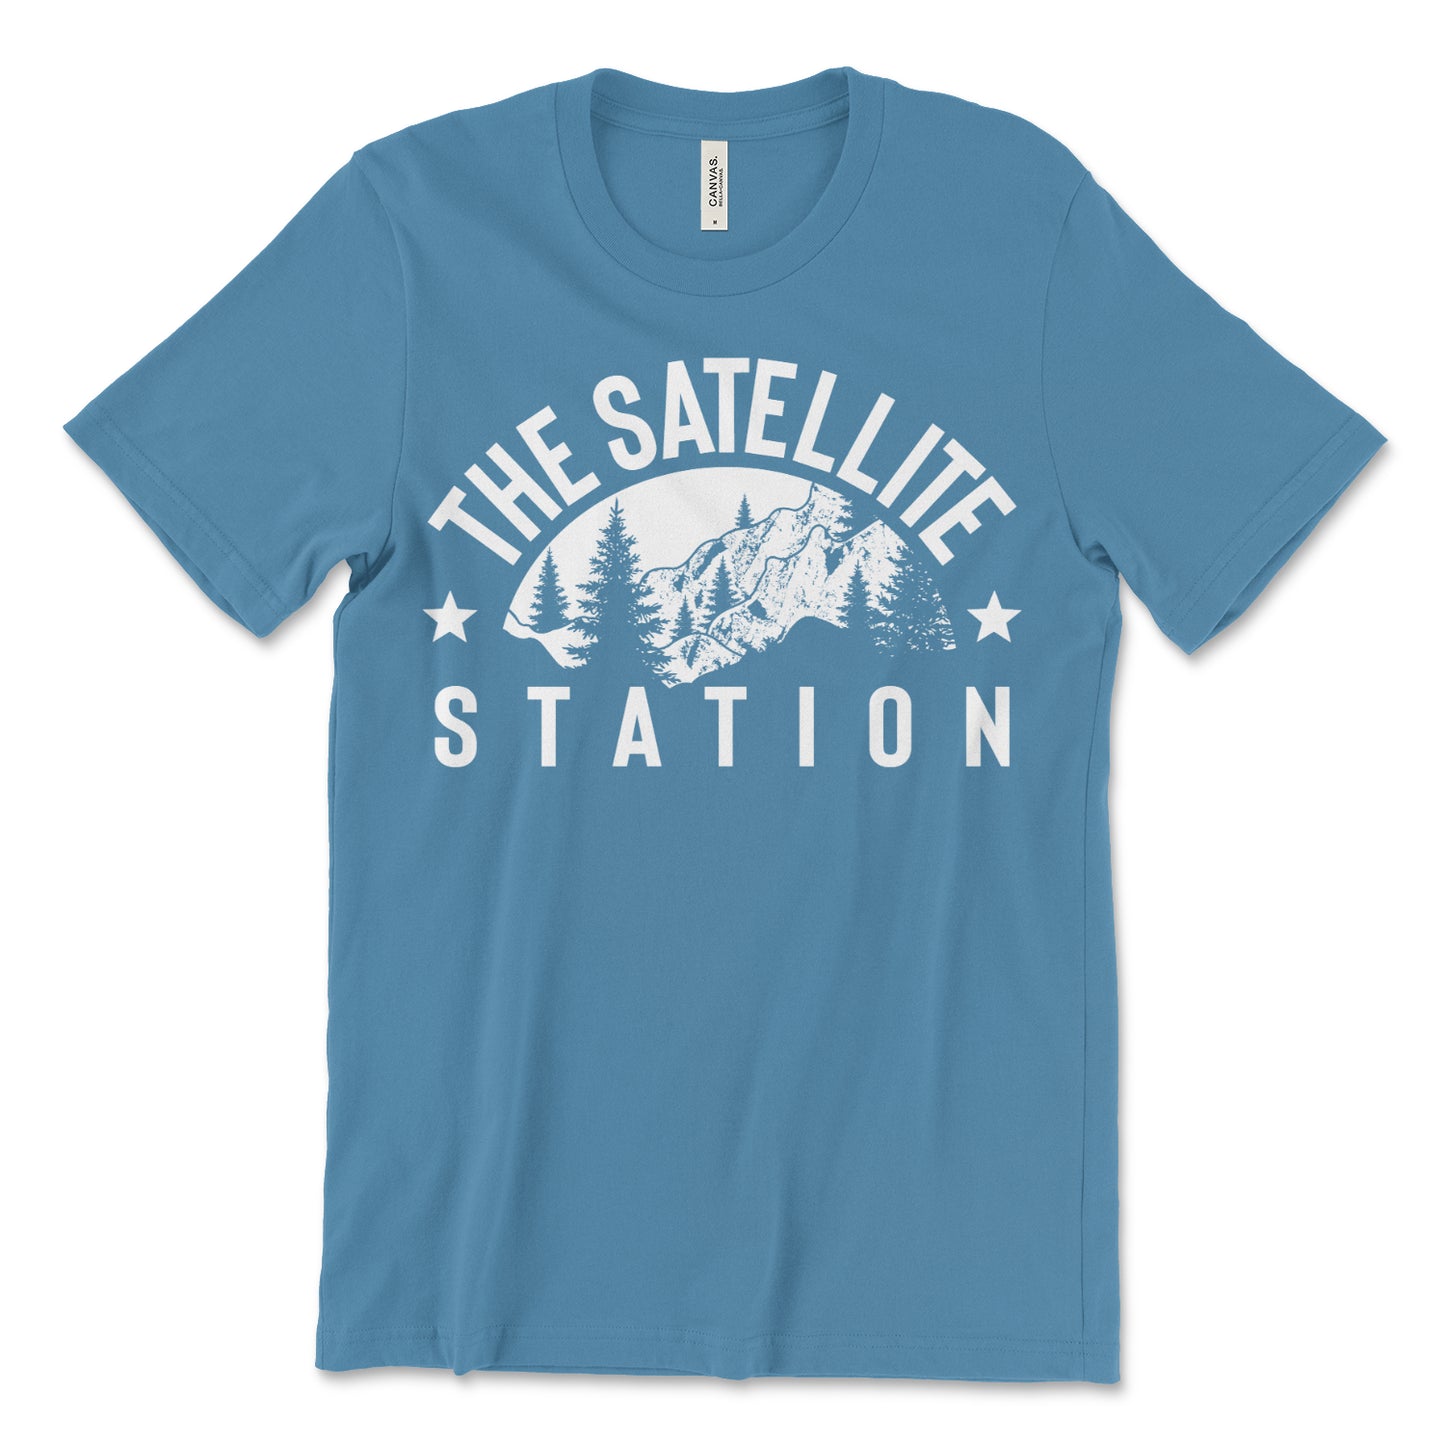 The Satellite Station "Mountain" Short-Sleeve Unisex T-Shirt